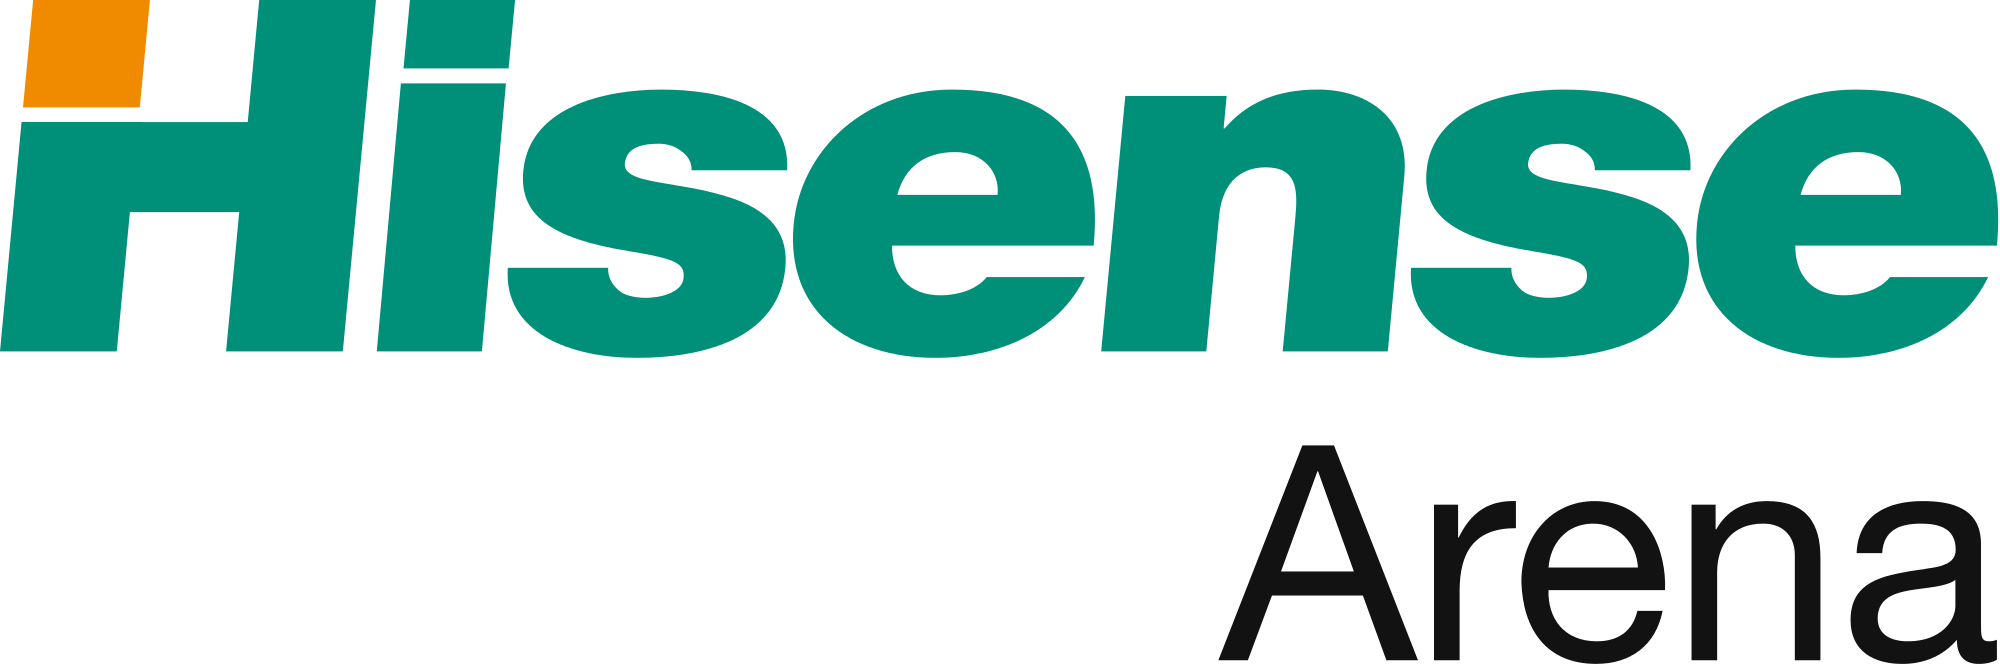 Hisense Logo - Hisense Arena logo.svg